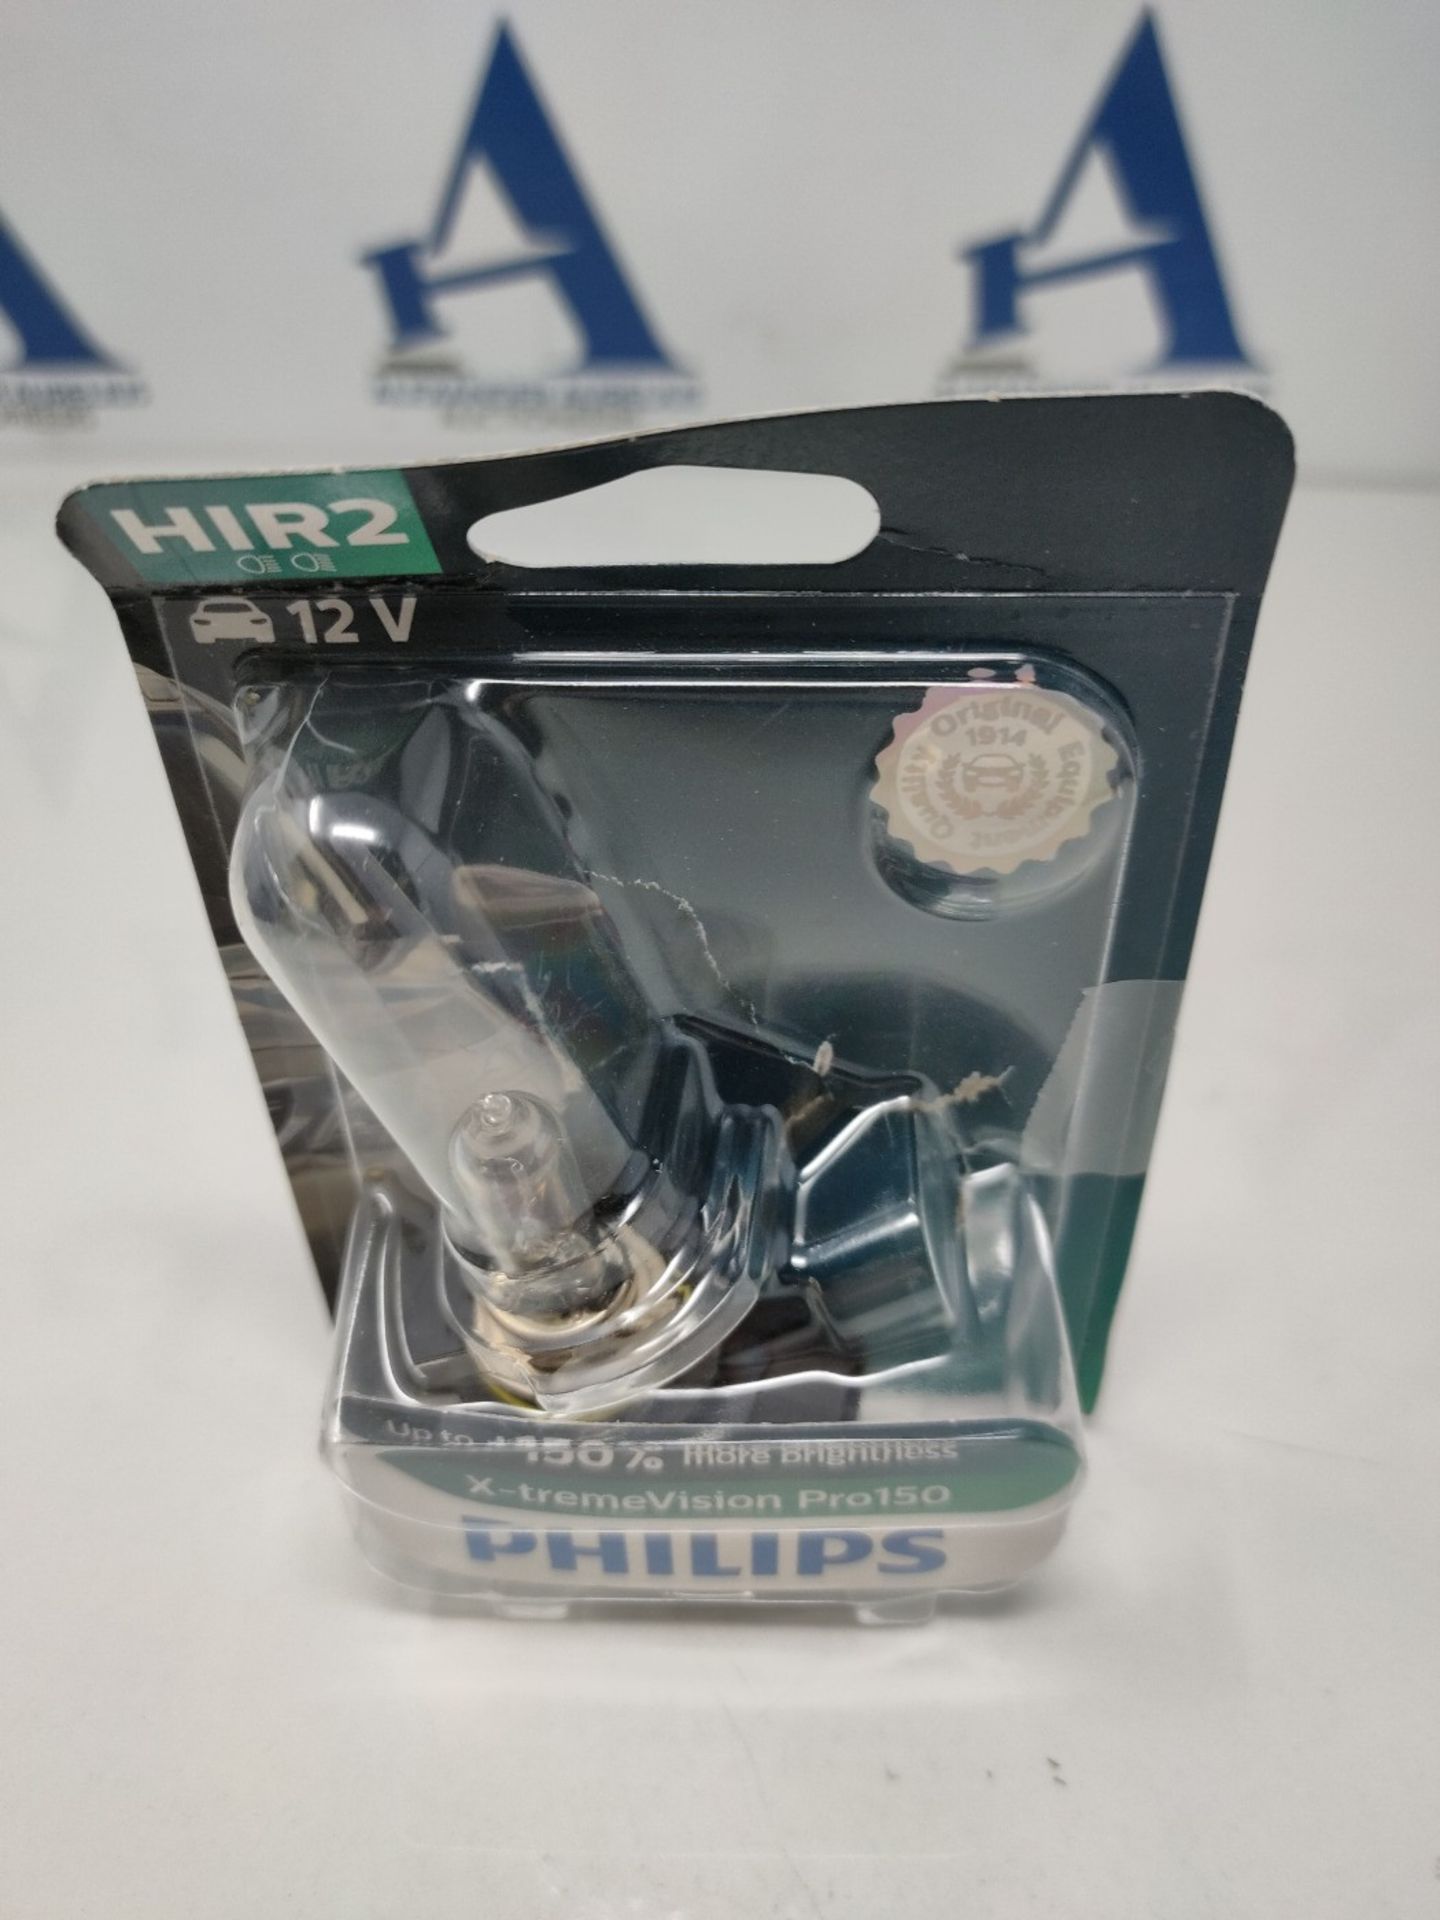 Philips X-tremeVision Pro150 HIR2 car headlight bulb +150%, single blister - Bild 3 aus 3